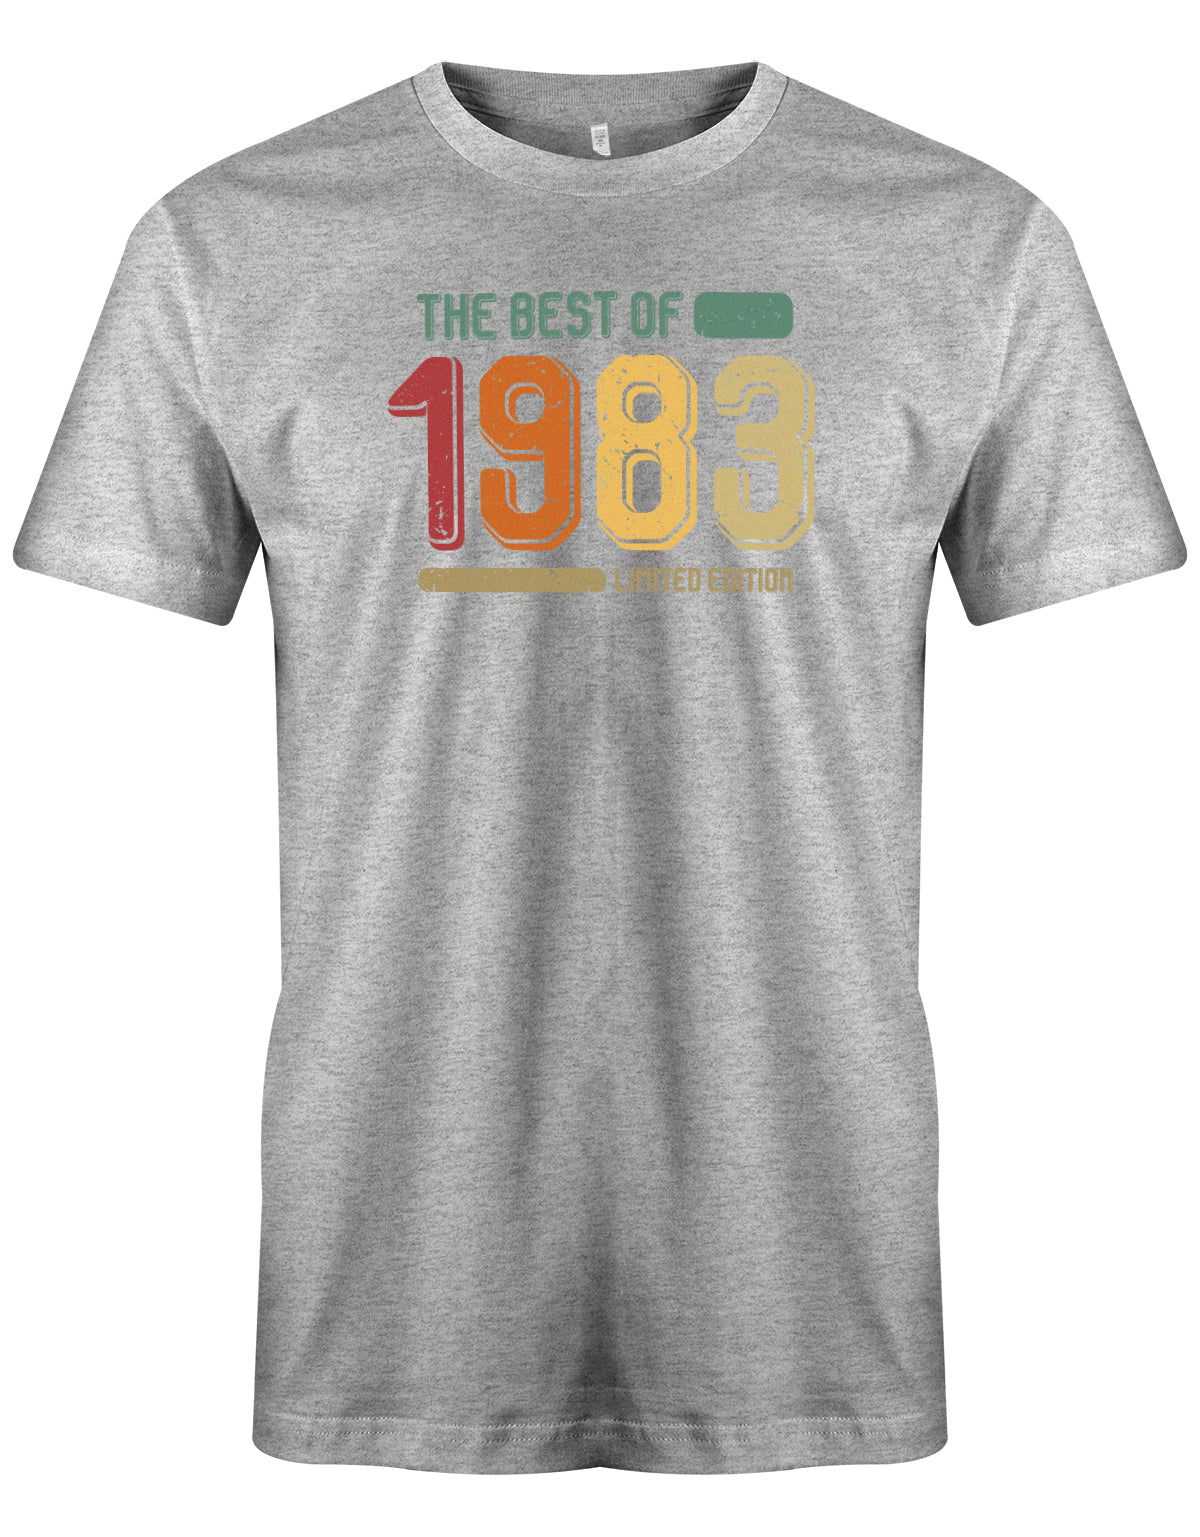 The Best of 1983 Limited Edition Vintage Retro - Jahrgang 1983 Geschenk Männer Shirt